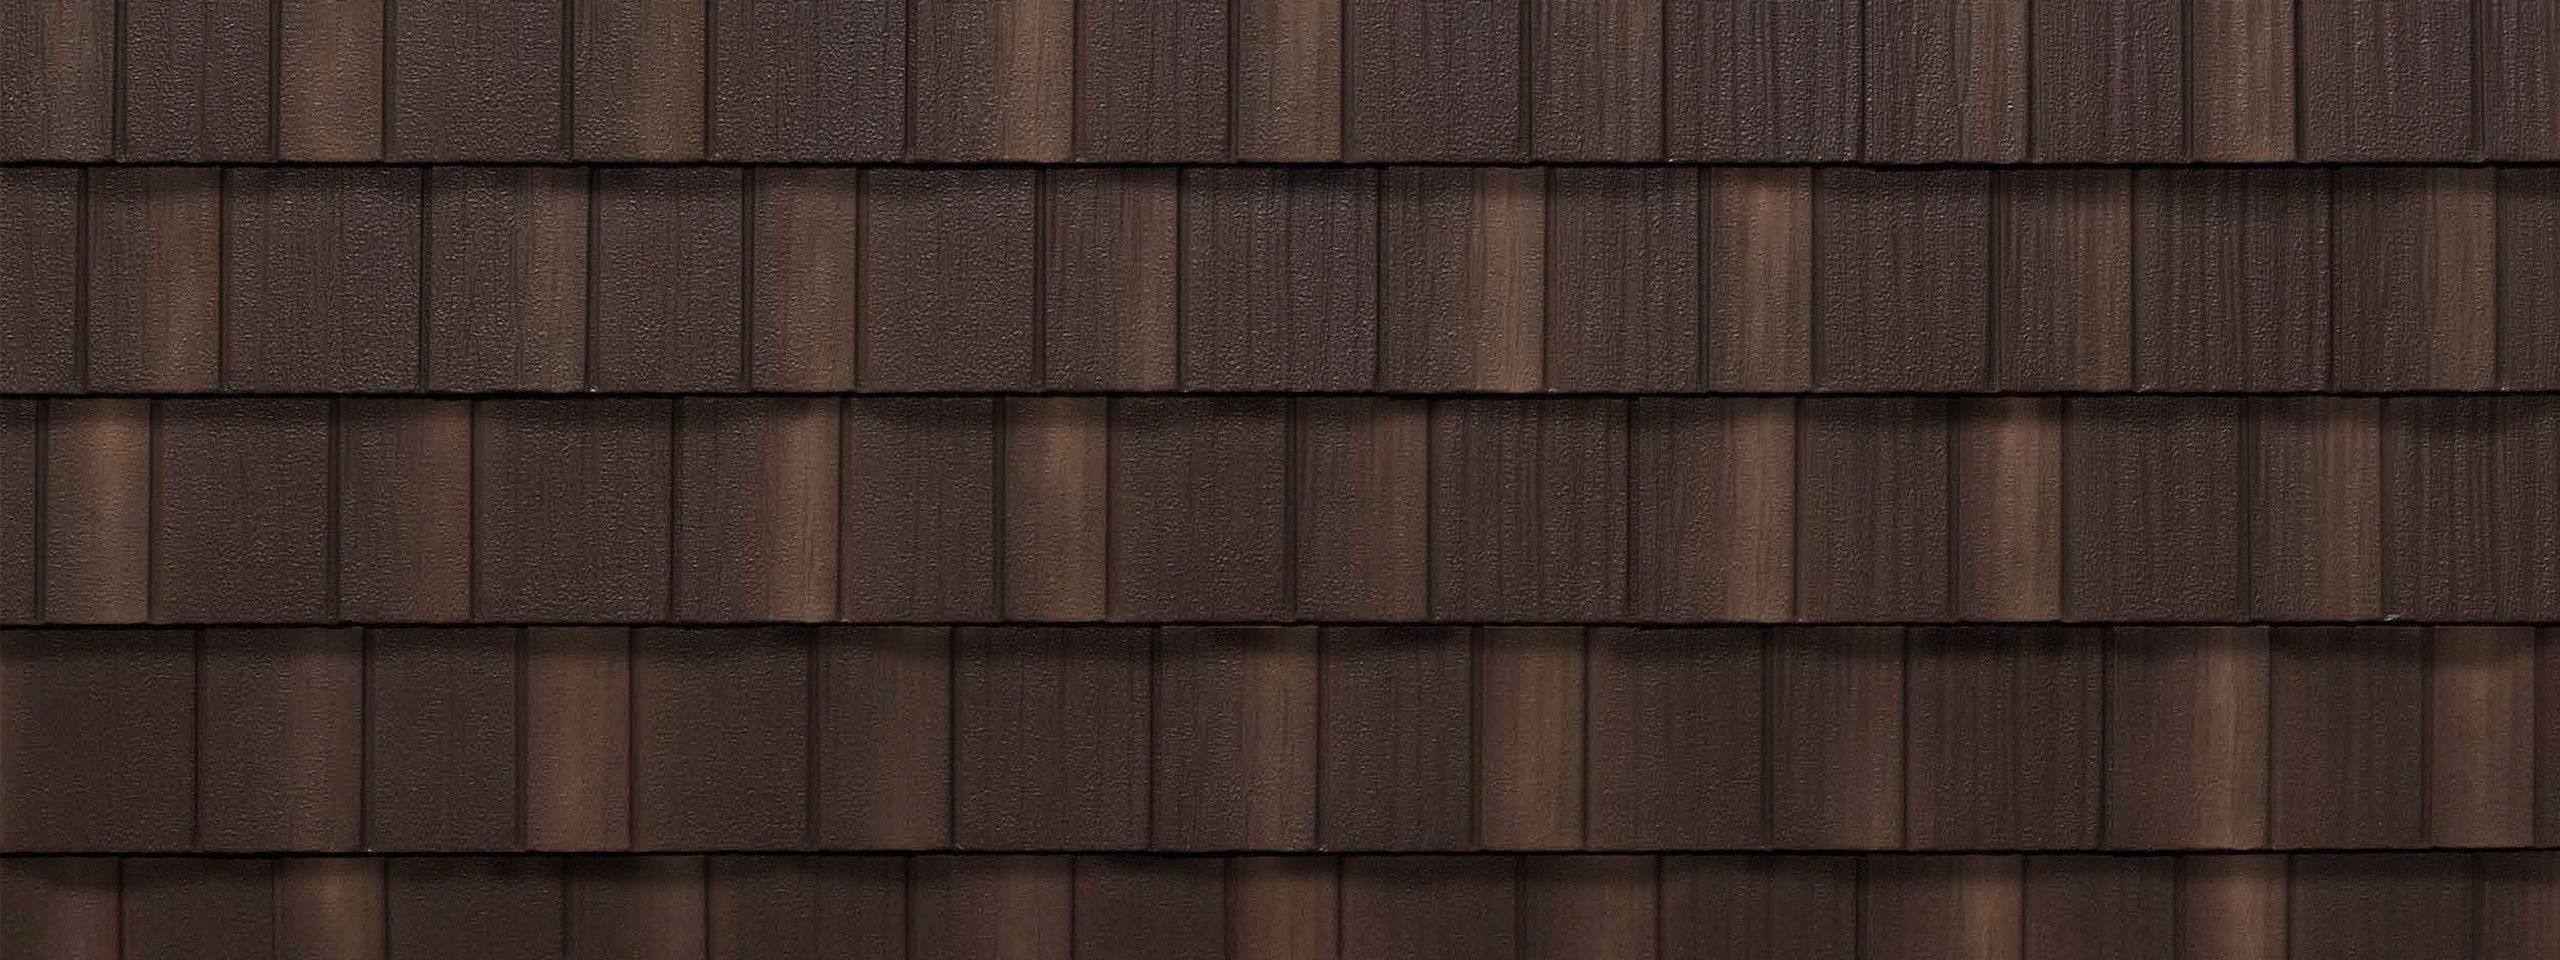 Infiniti enhanced chestnut brown stone coated shake roofing